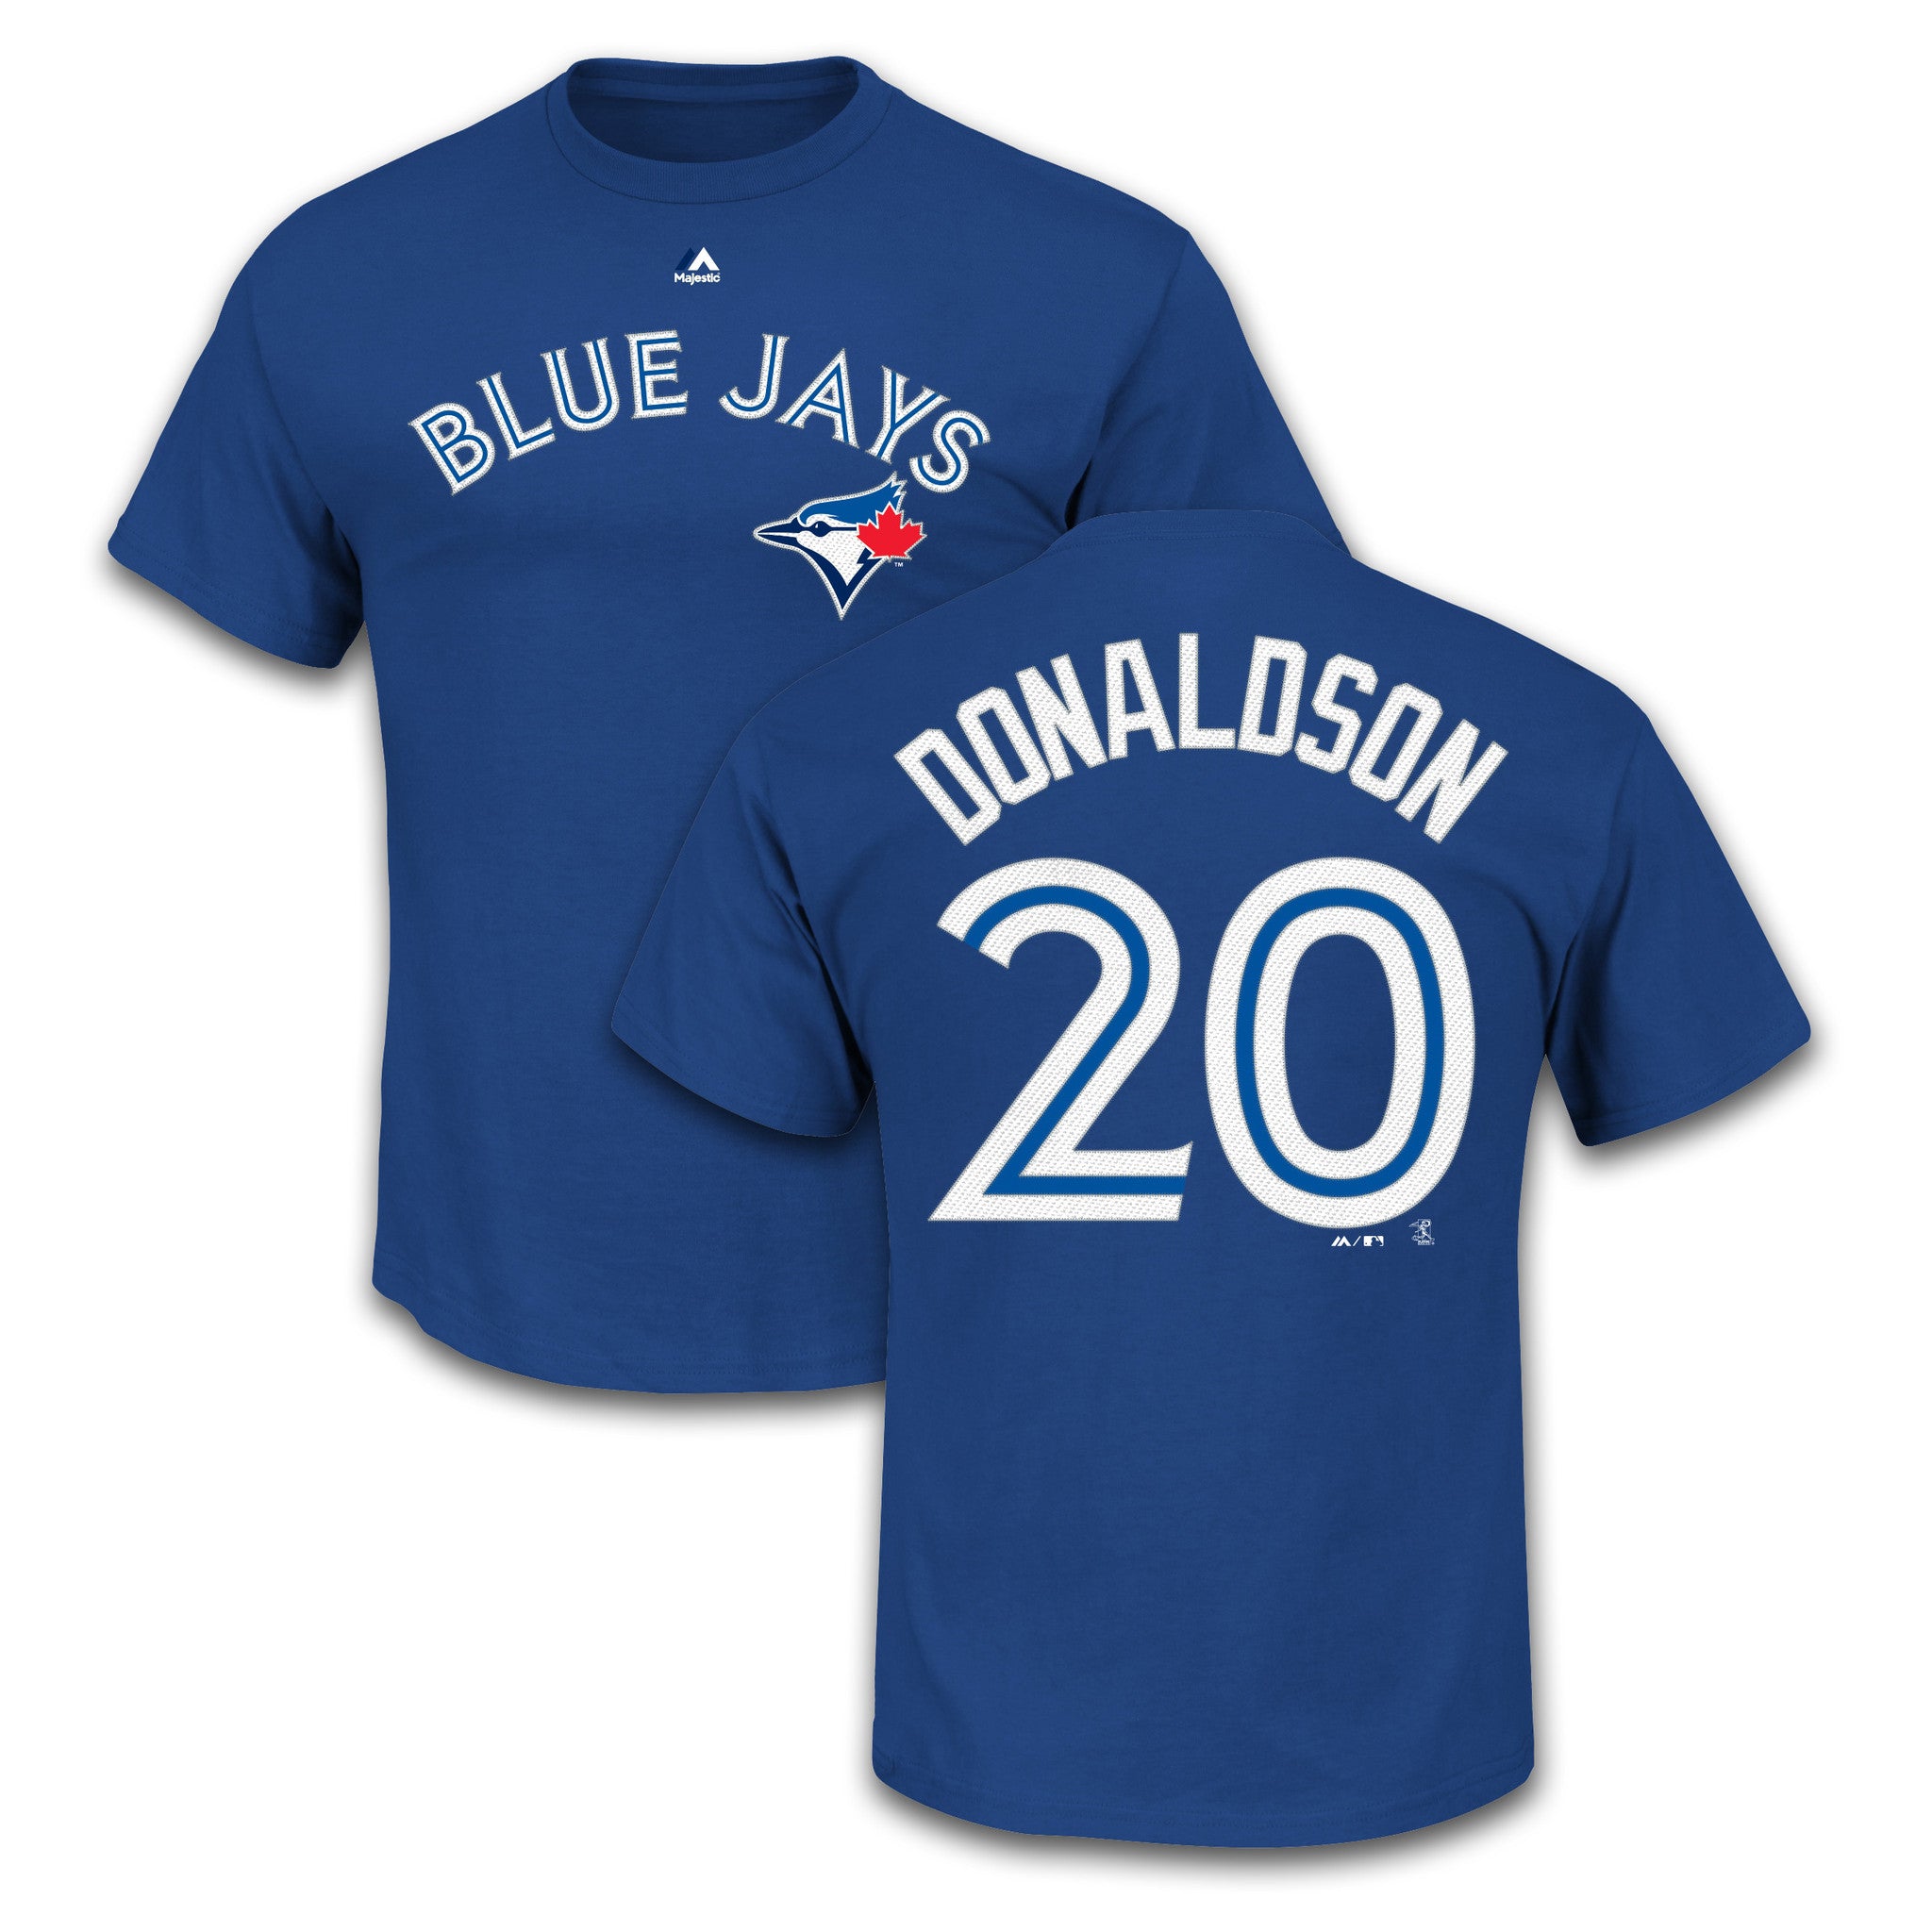 donaldson shirt